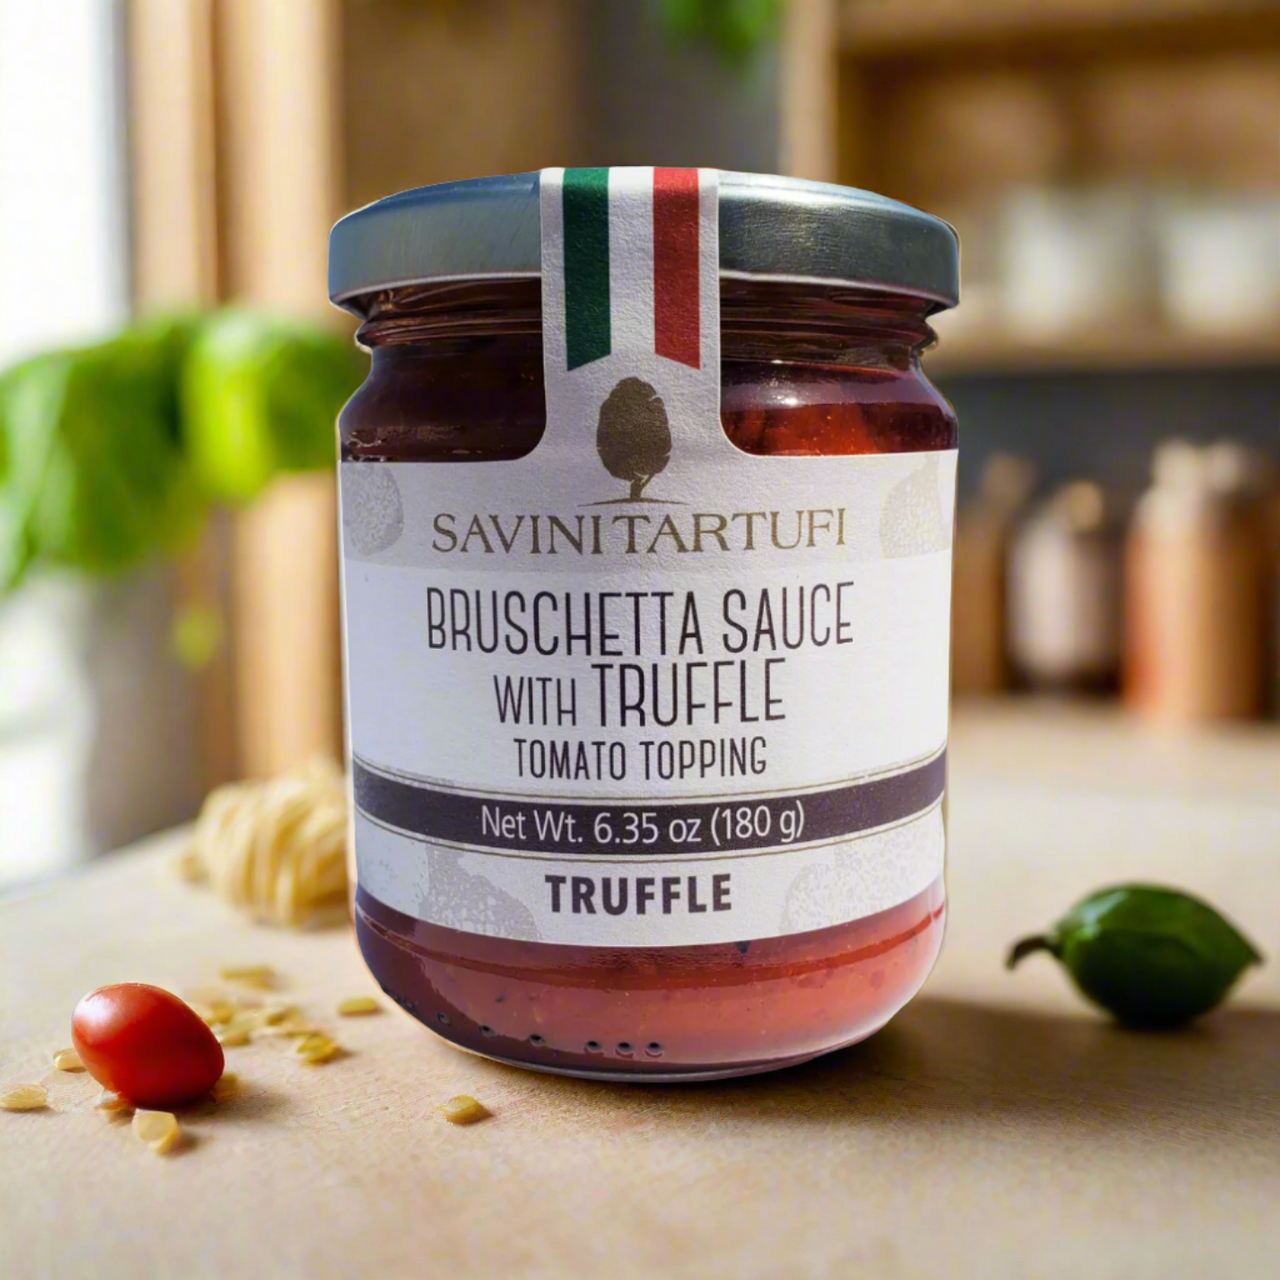 Bruschetta Sauce with Truffle